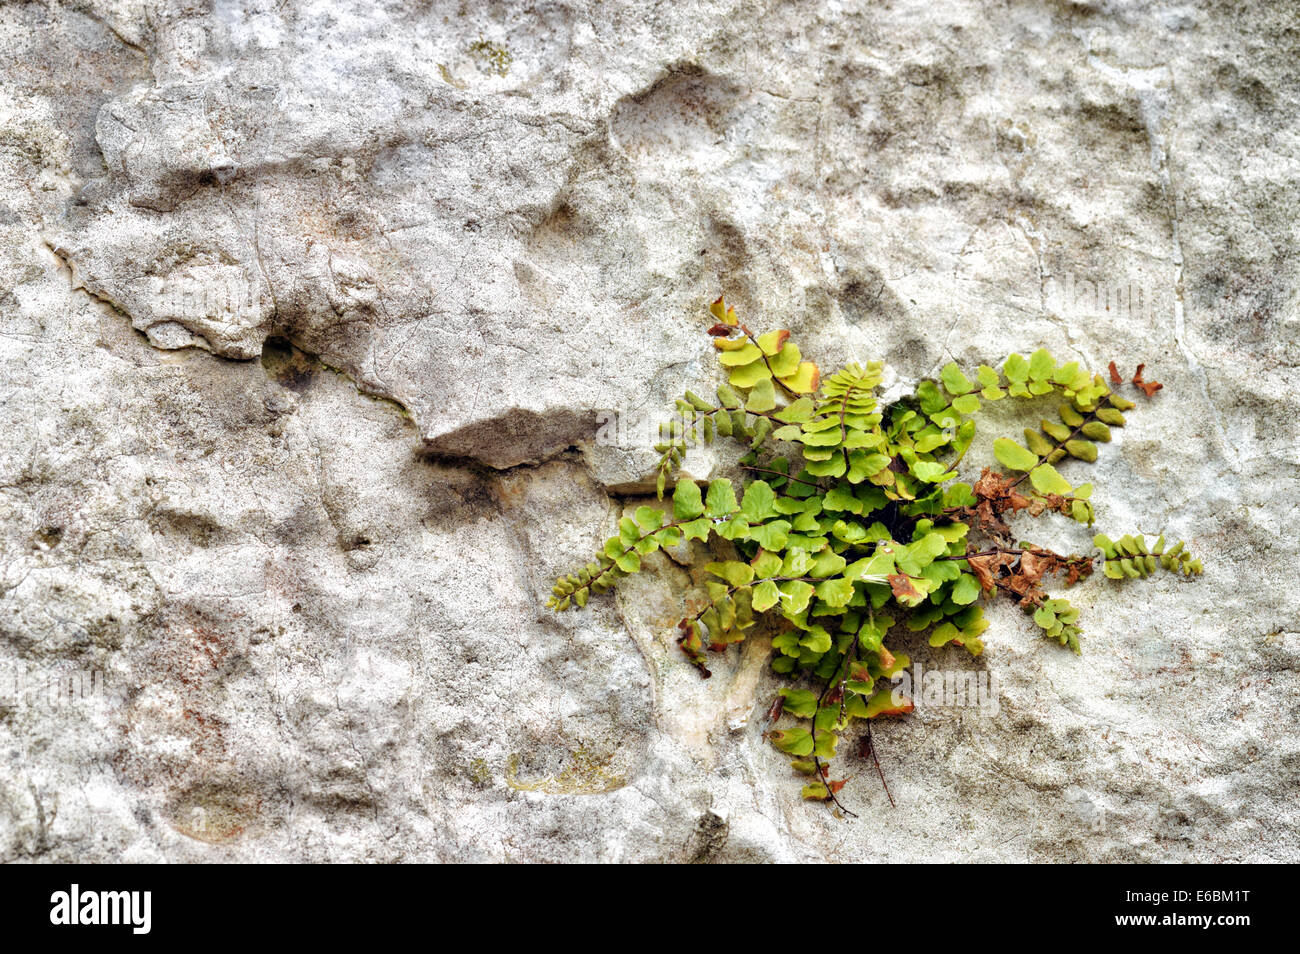 Flora of Ojcow National Park. Maidenhair spleenwort (Asplenium trichomanes) growing in a lime rock. Stock Photo